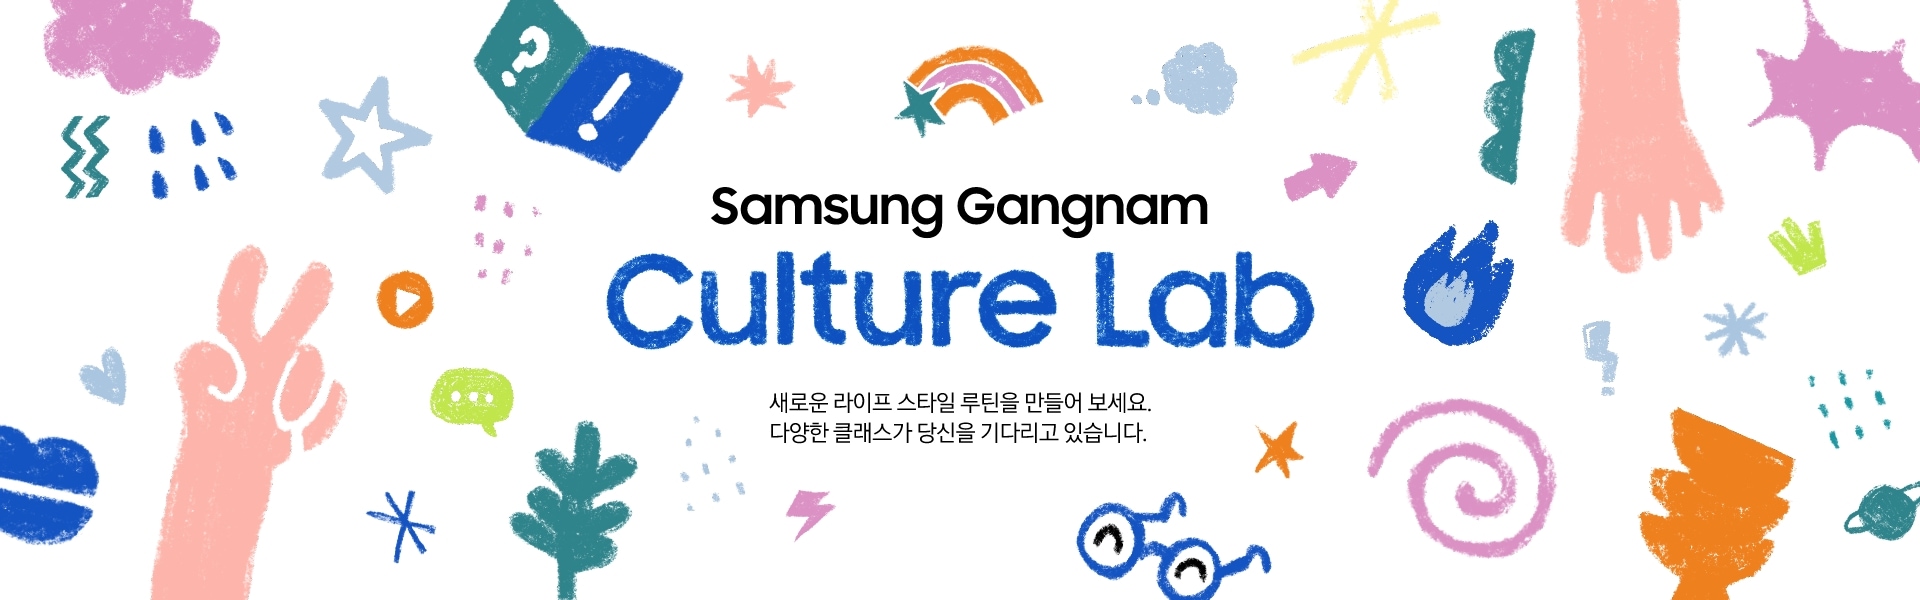 samsung gangnam culture lab 새로운 라이프 스타일 루틴을 만들어 보세요. 다양한 클래스가 당신을 기다리고 있습니다.